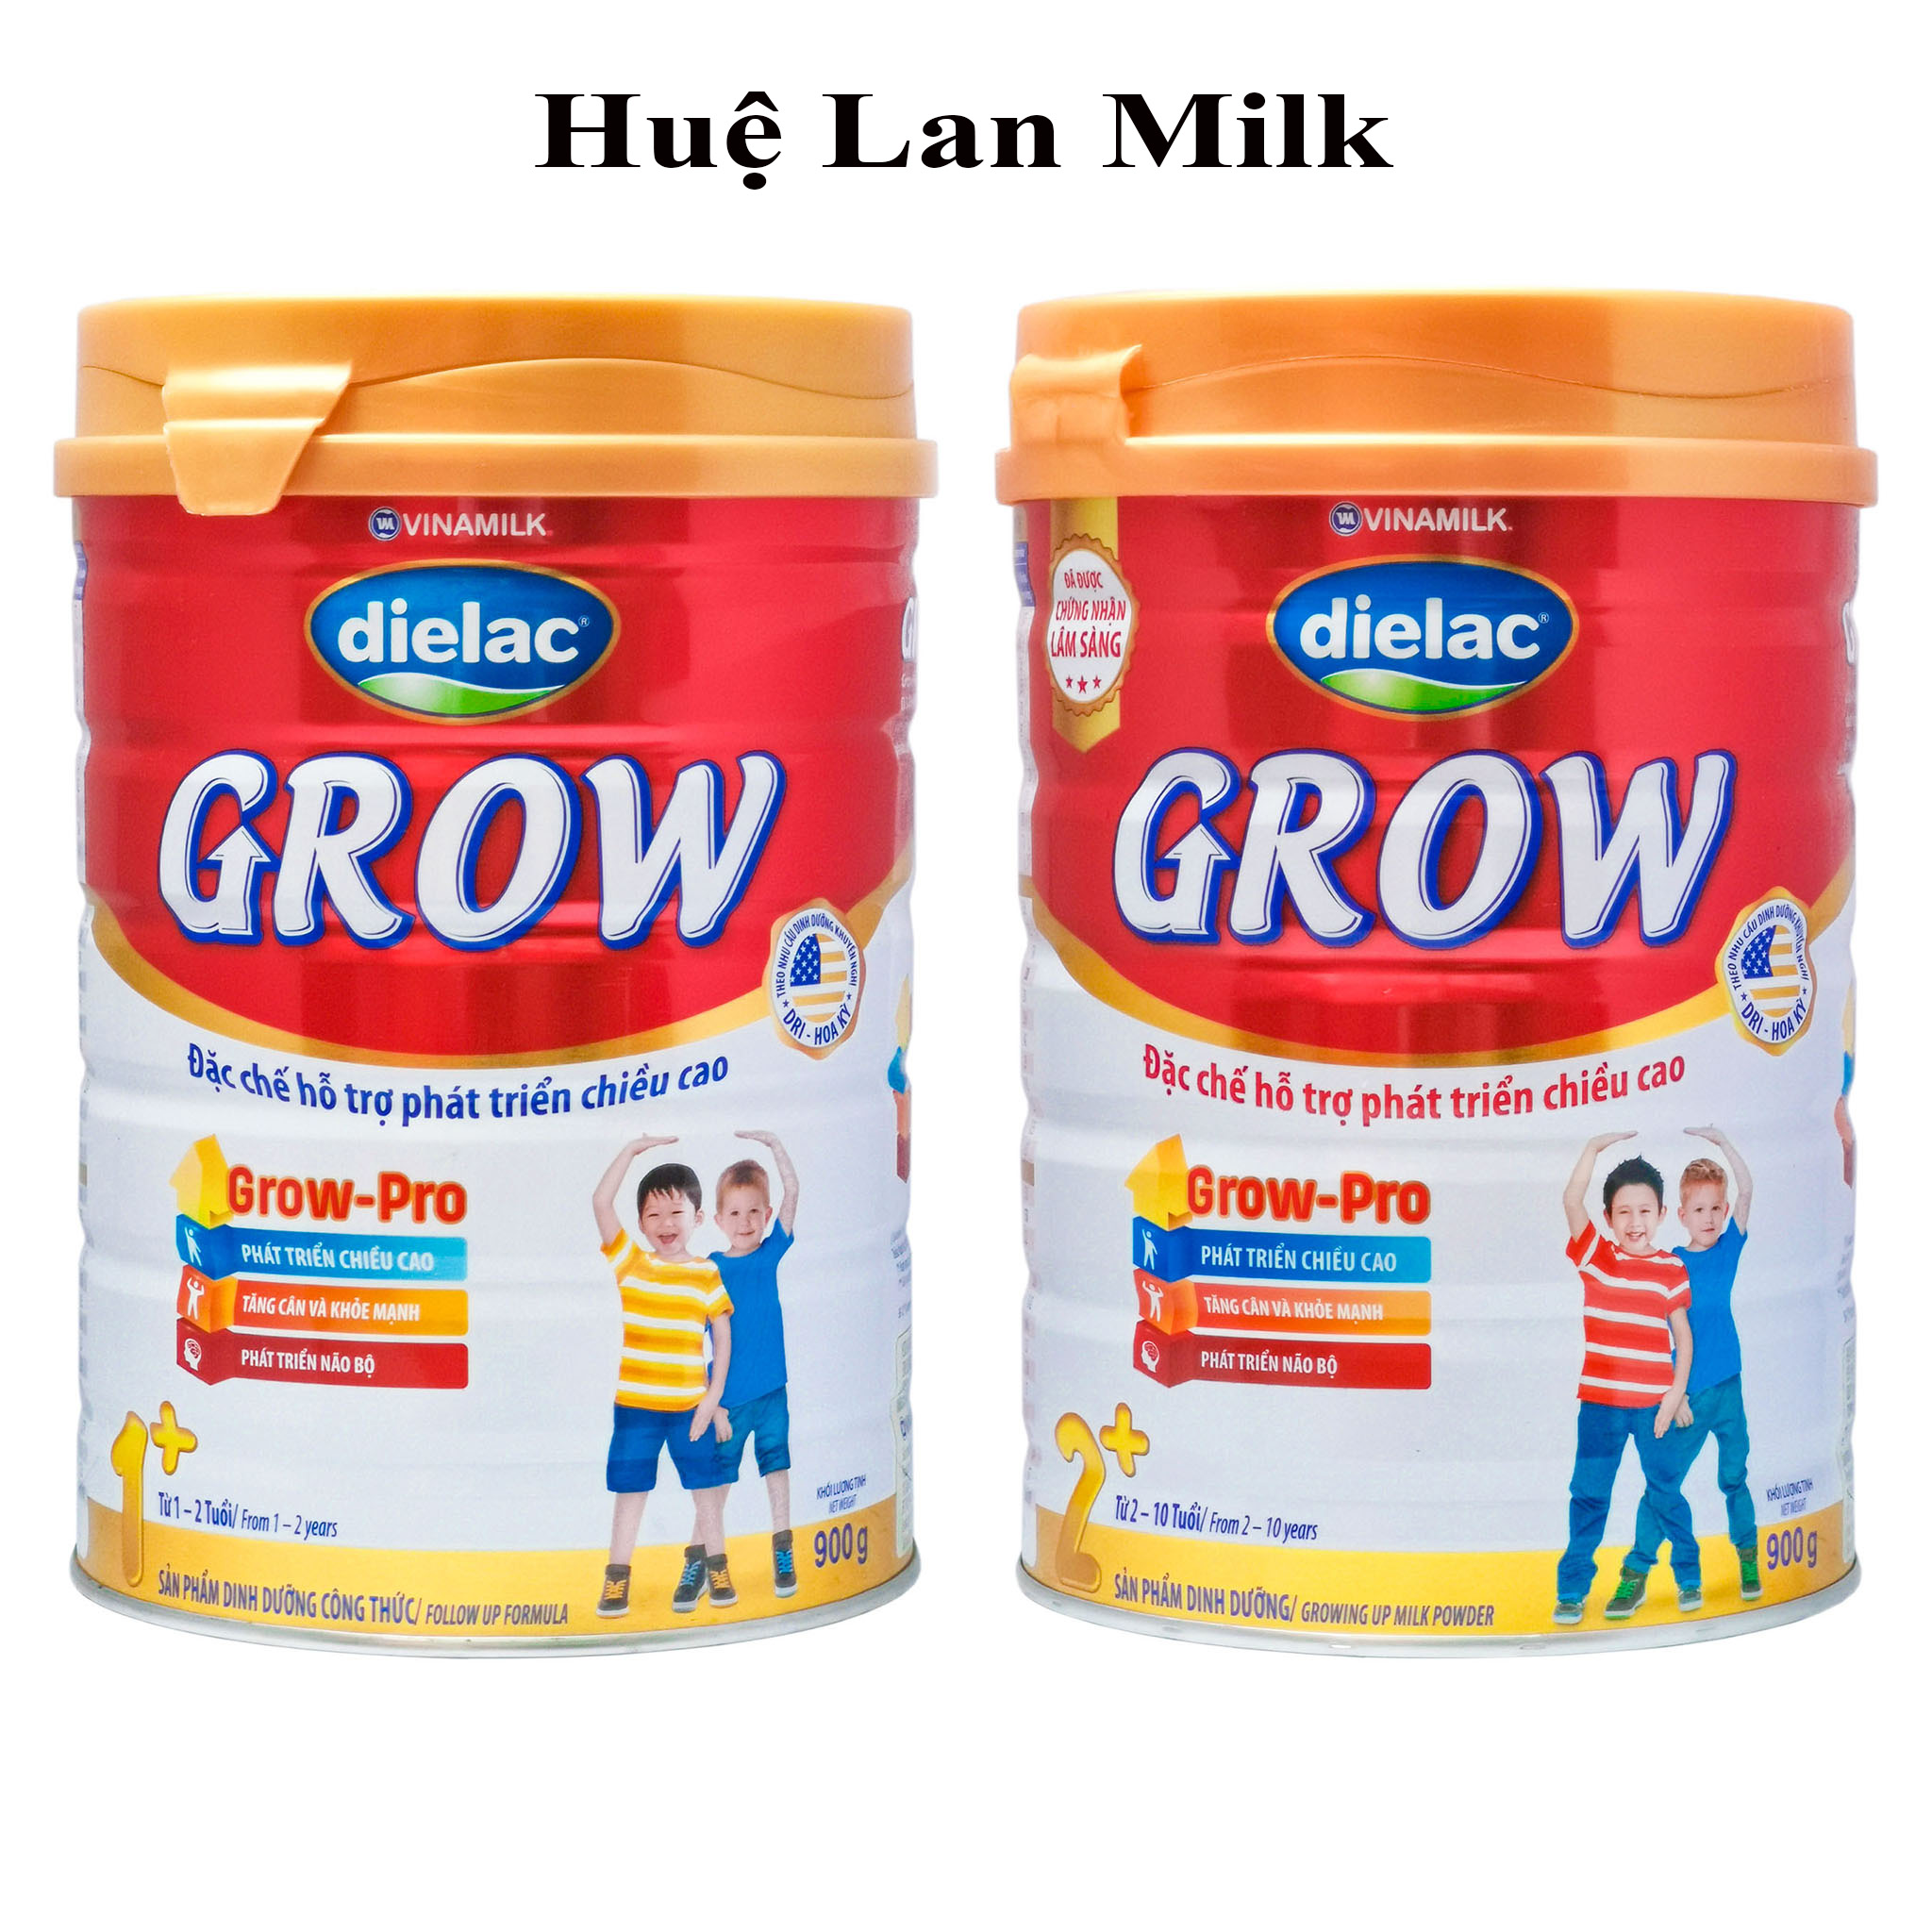 SỮA BỘT DIELAC GROW 1+/2+ 900G - Huệ Lan Milk